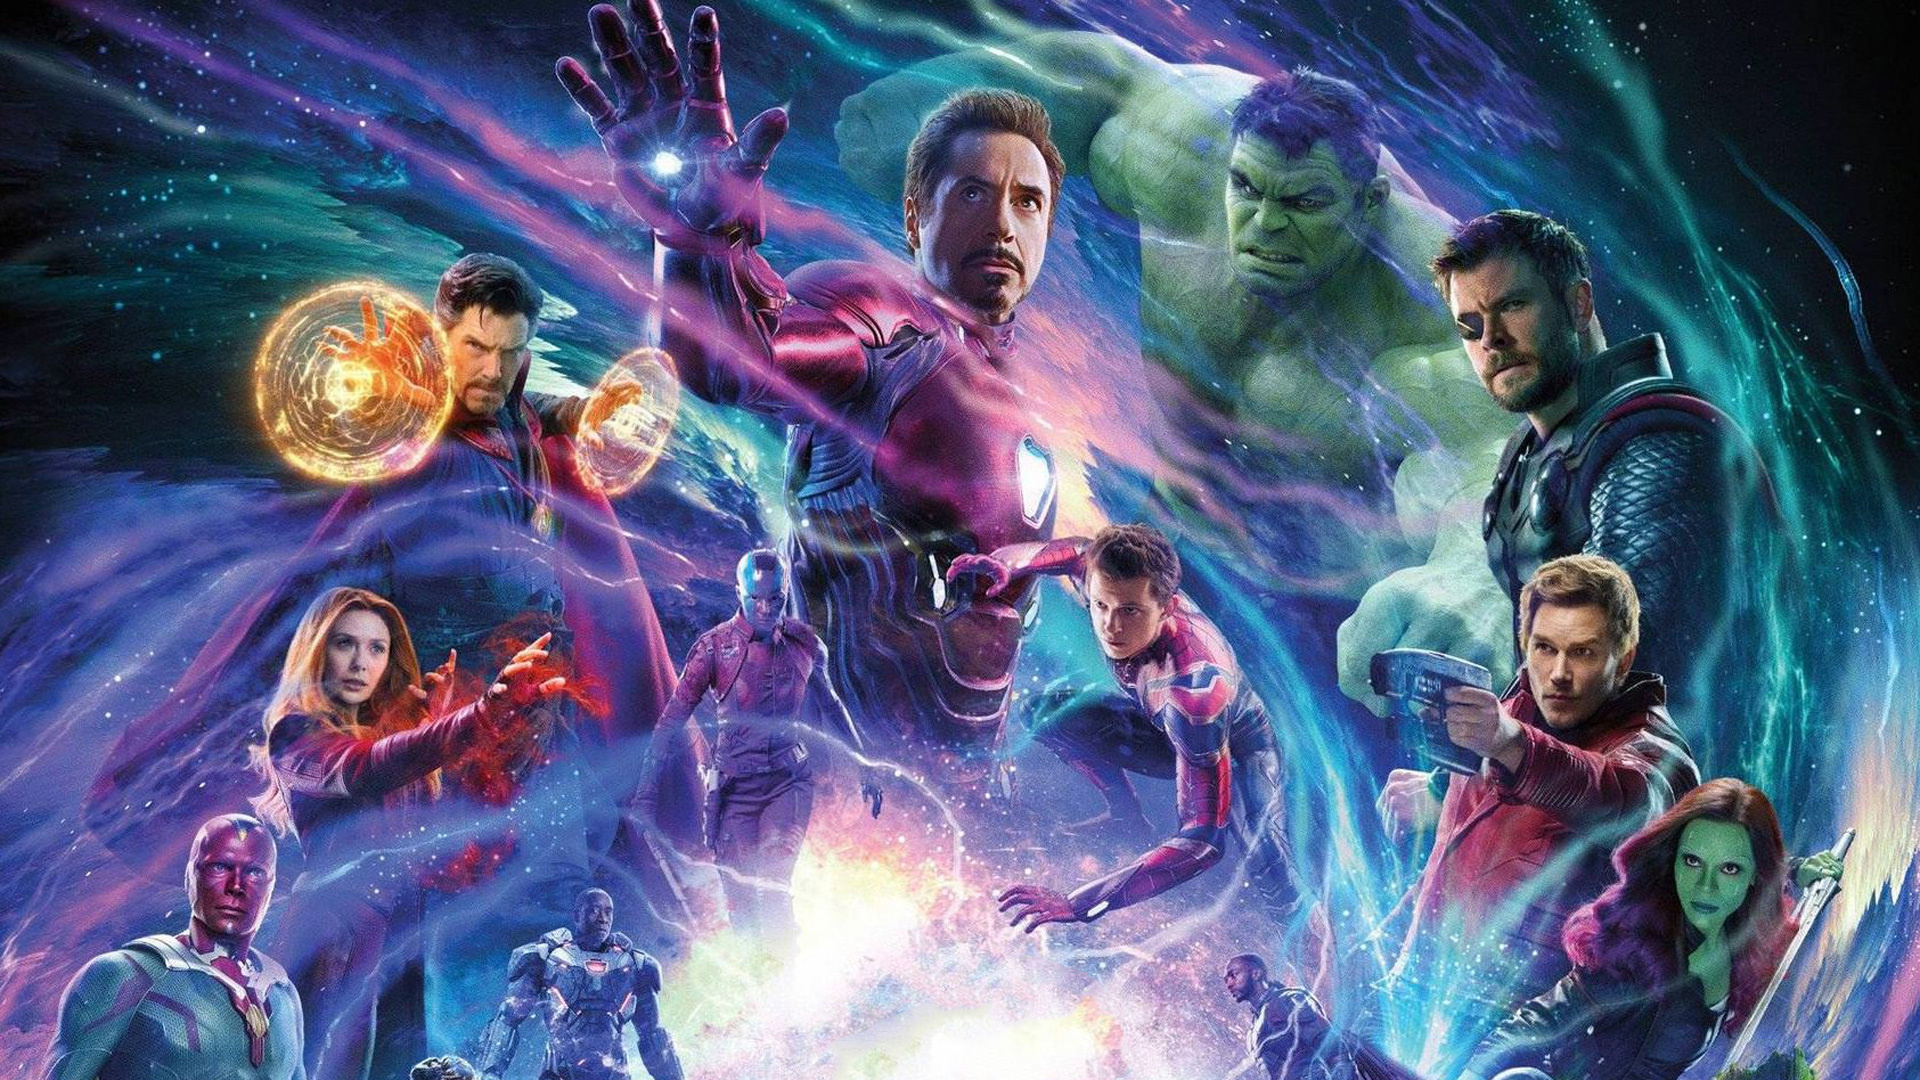 Download 19x1080 Wallpaper Avengers Infinity War Movie Superhero Artwork Poster Full Hd Hdtv Fhd 1080p 19x1080 Hd Image Background 6504